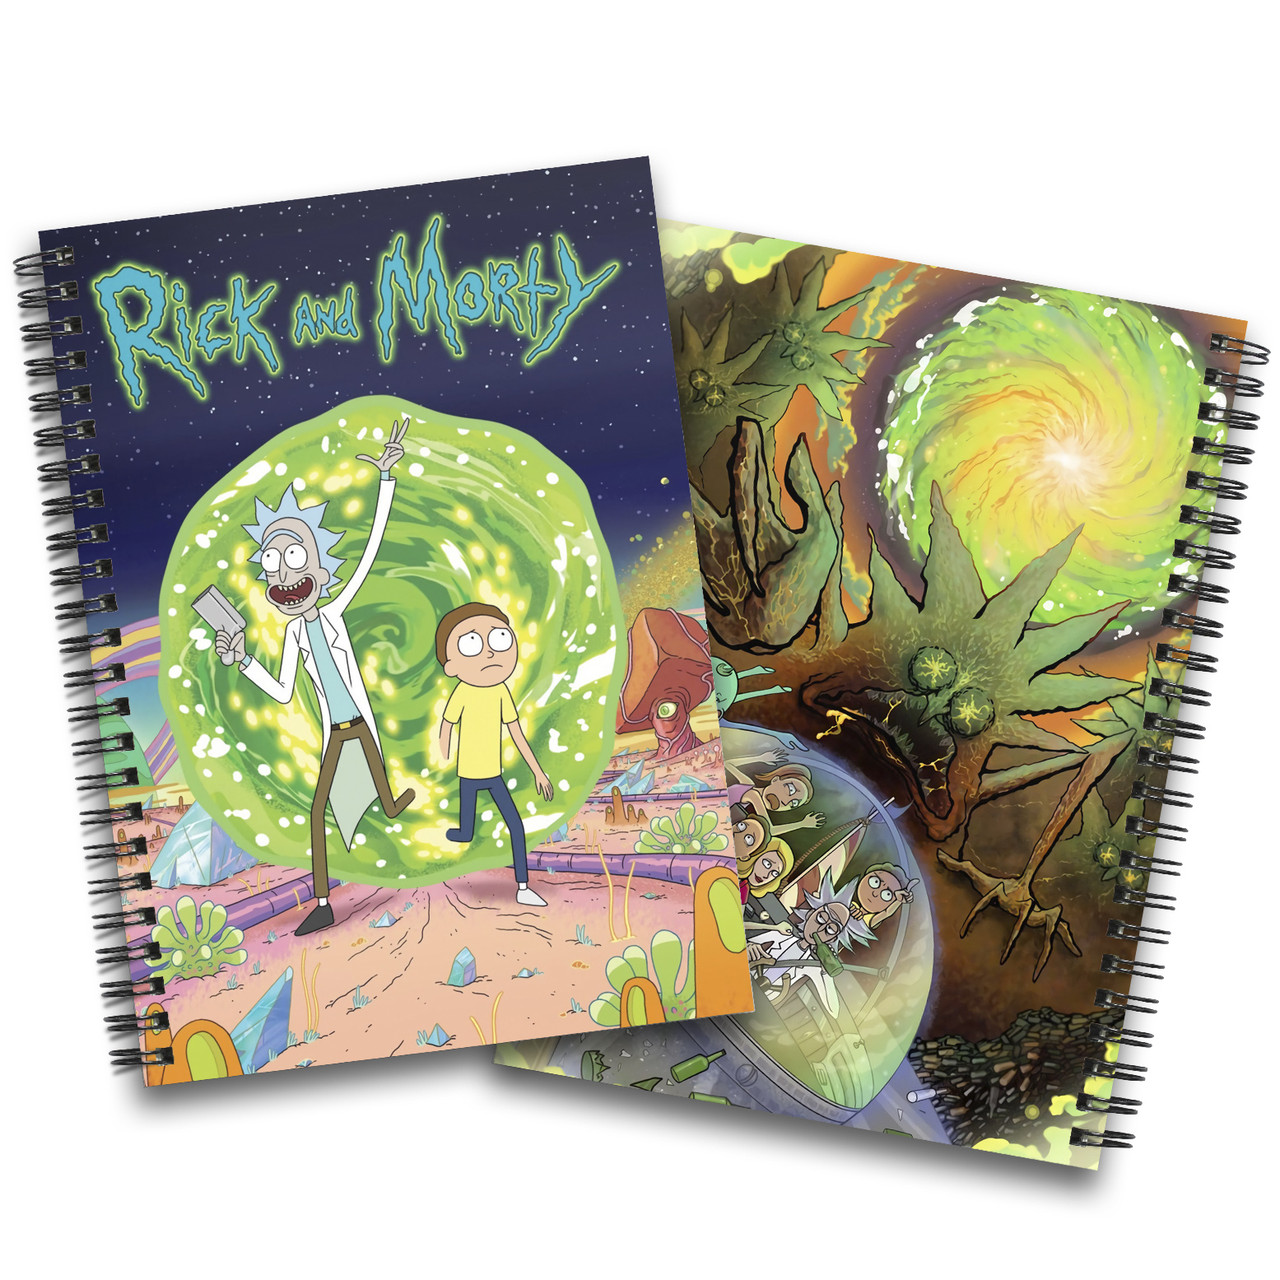 Блокнот Рік і Морті | Rick and Morty 01